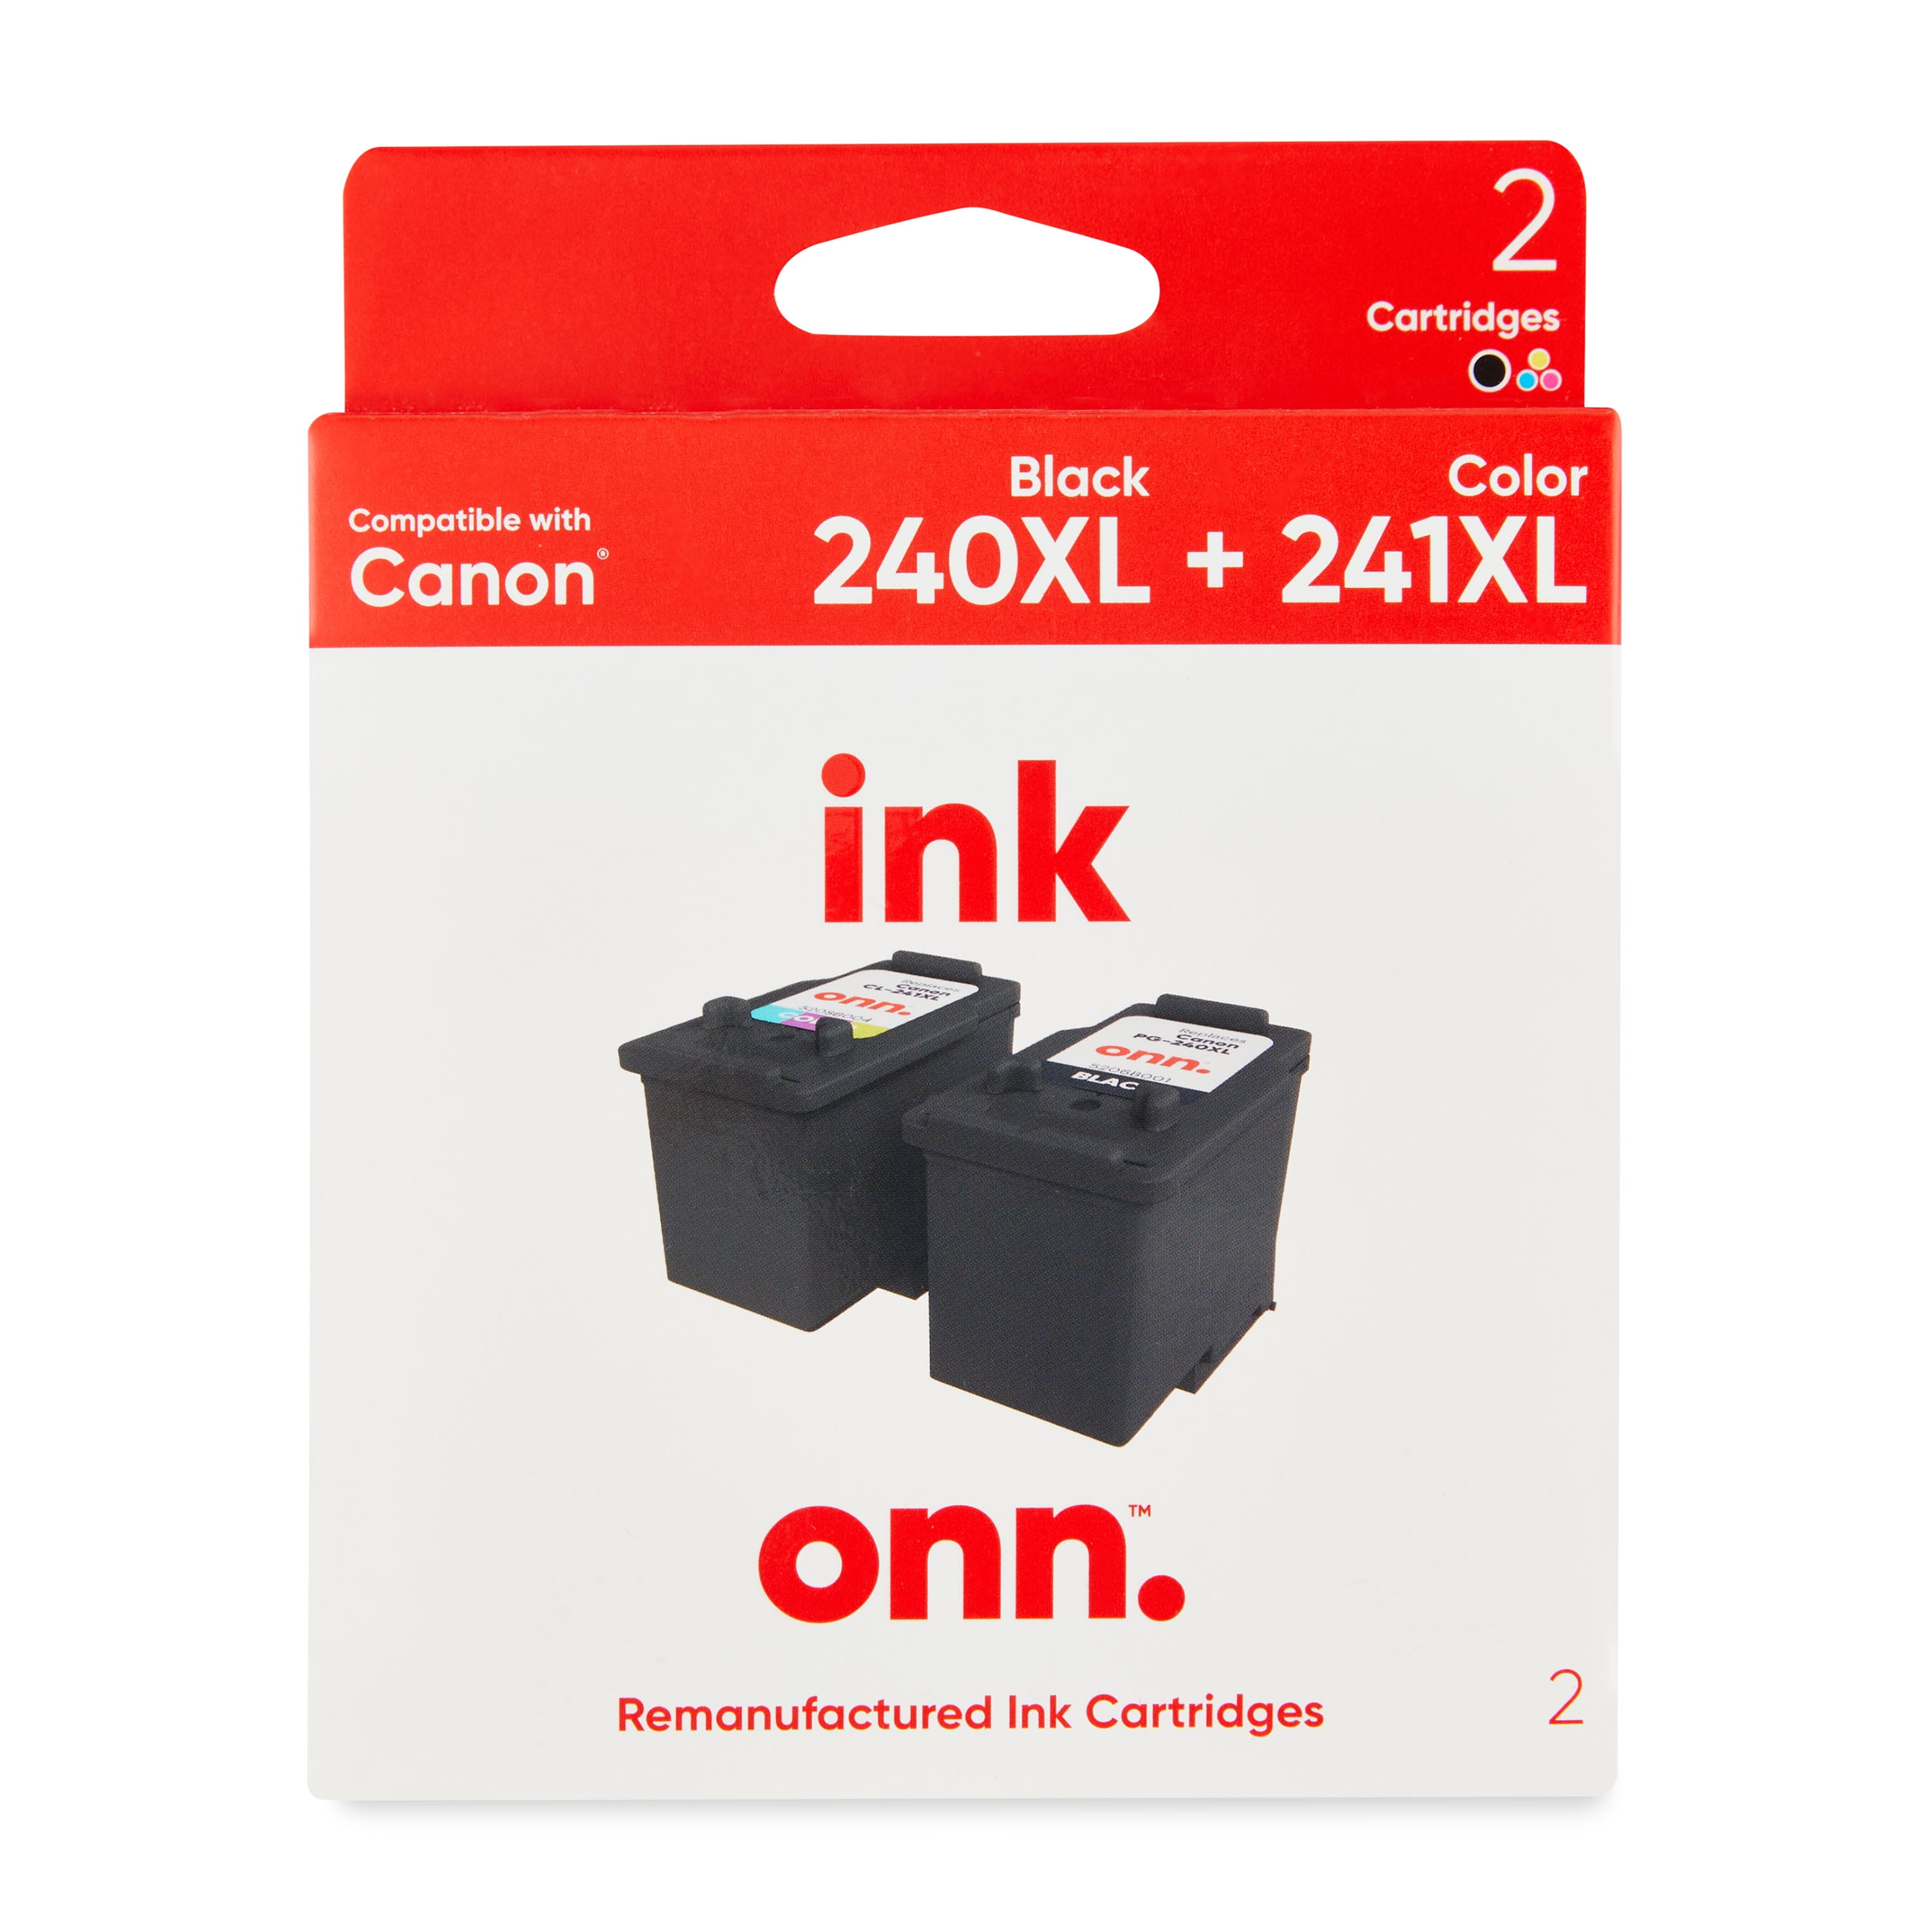 onn. Remanufactured Ink Cartridge, Canon PG-240XL Black, 241XL Tri-Color (Cyan, Yellow, Magenta), 2 Cartridges